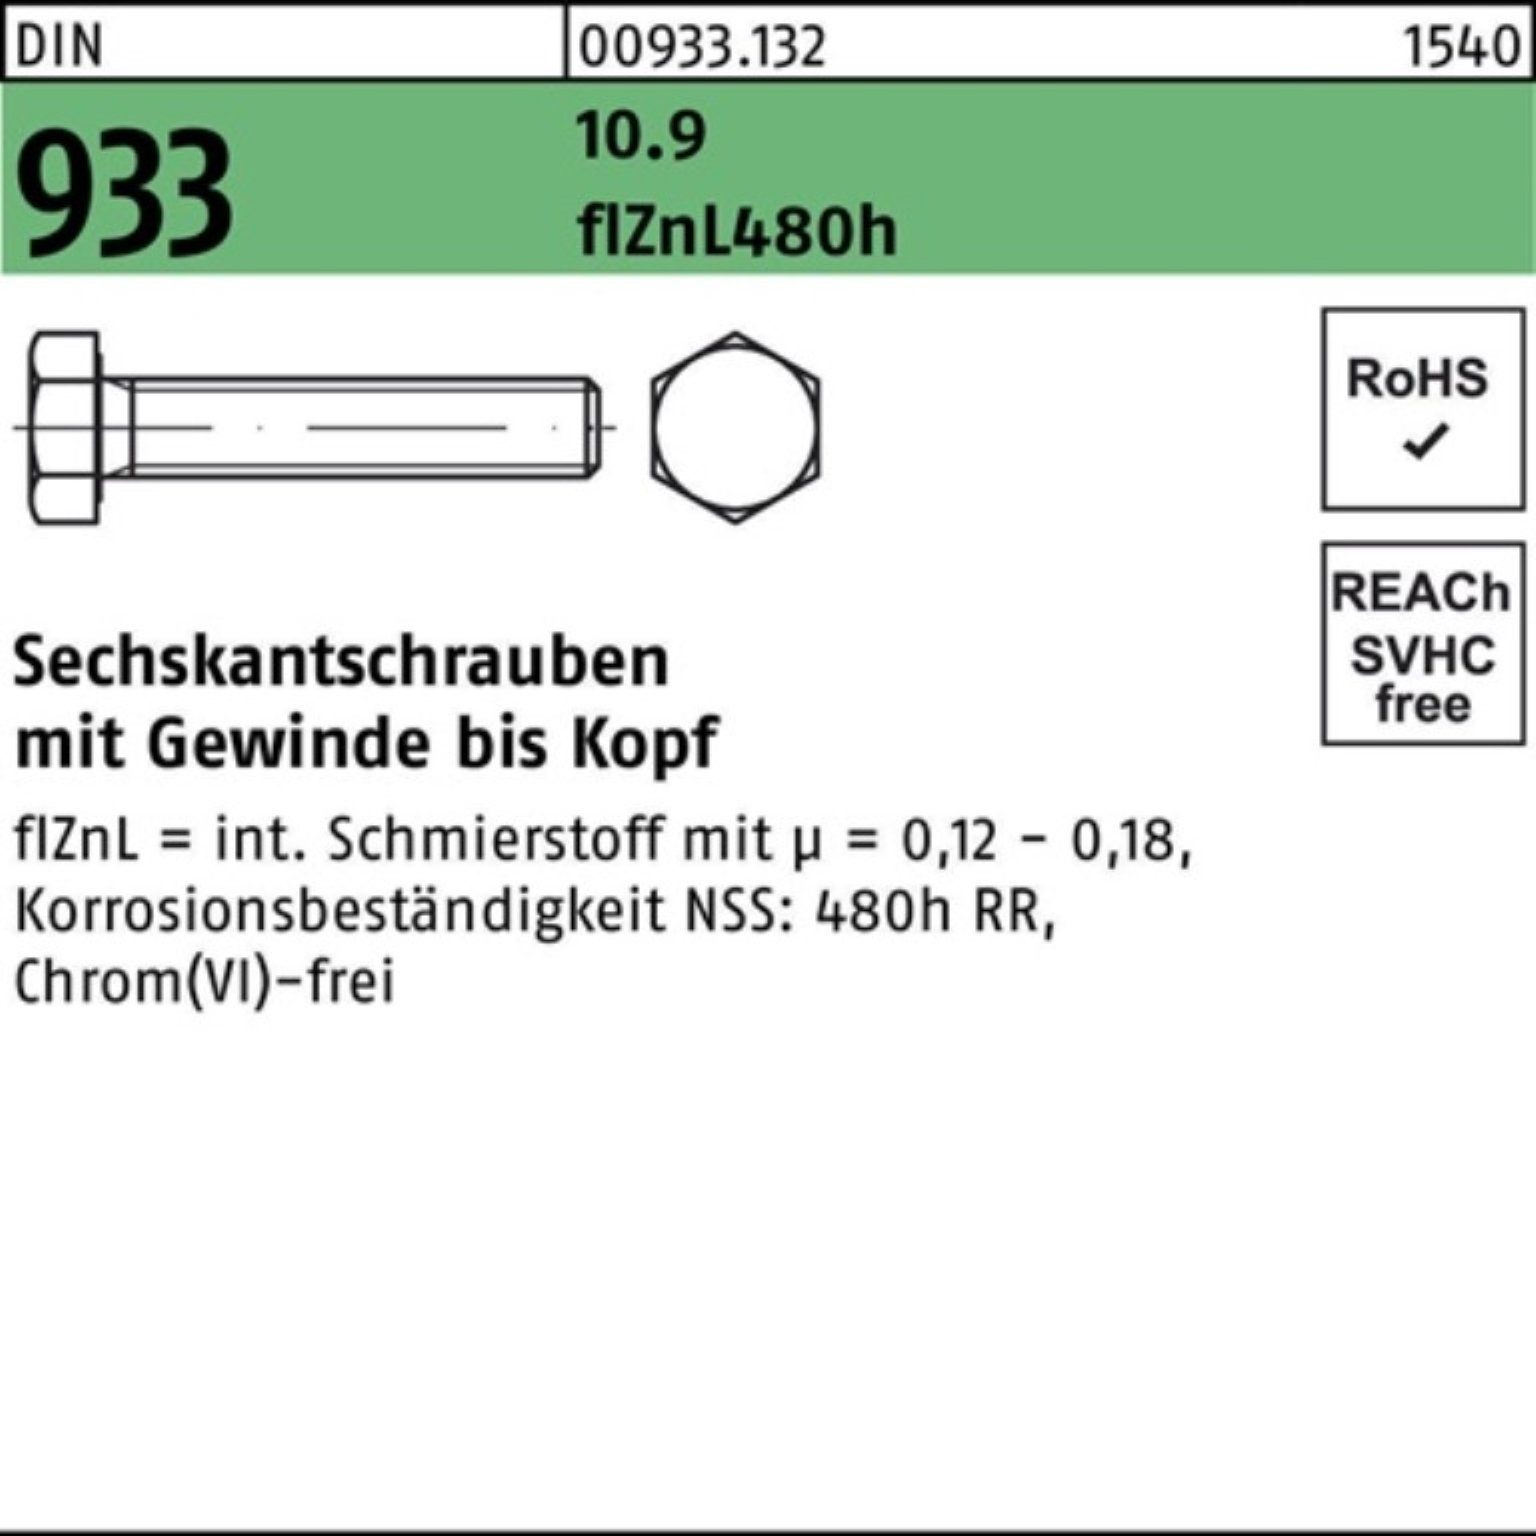 Reyher Sechskantschraube 100er M24x Sechskantschraube 933 flZnL/nc/x/x/480 DIN 120 Pack VG 10.9